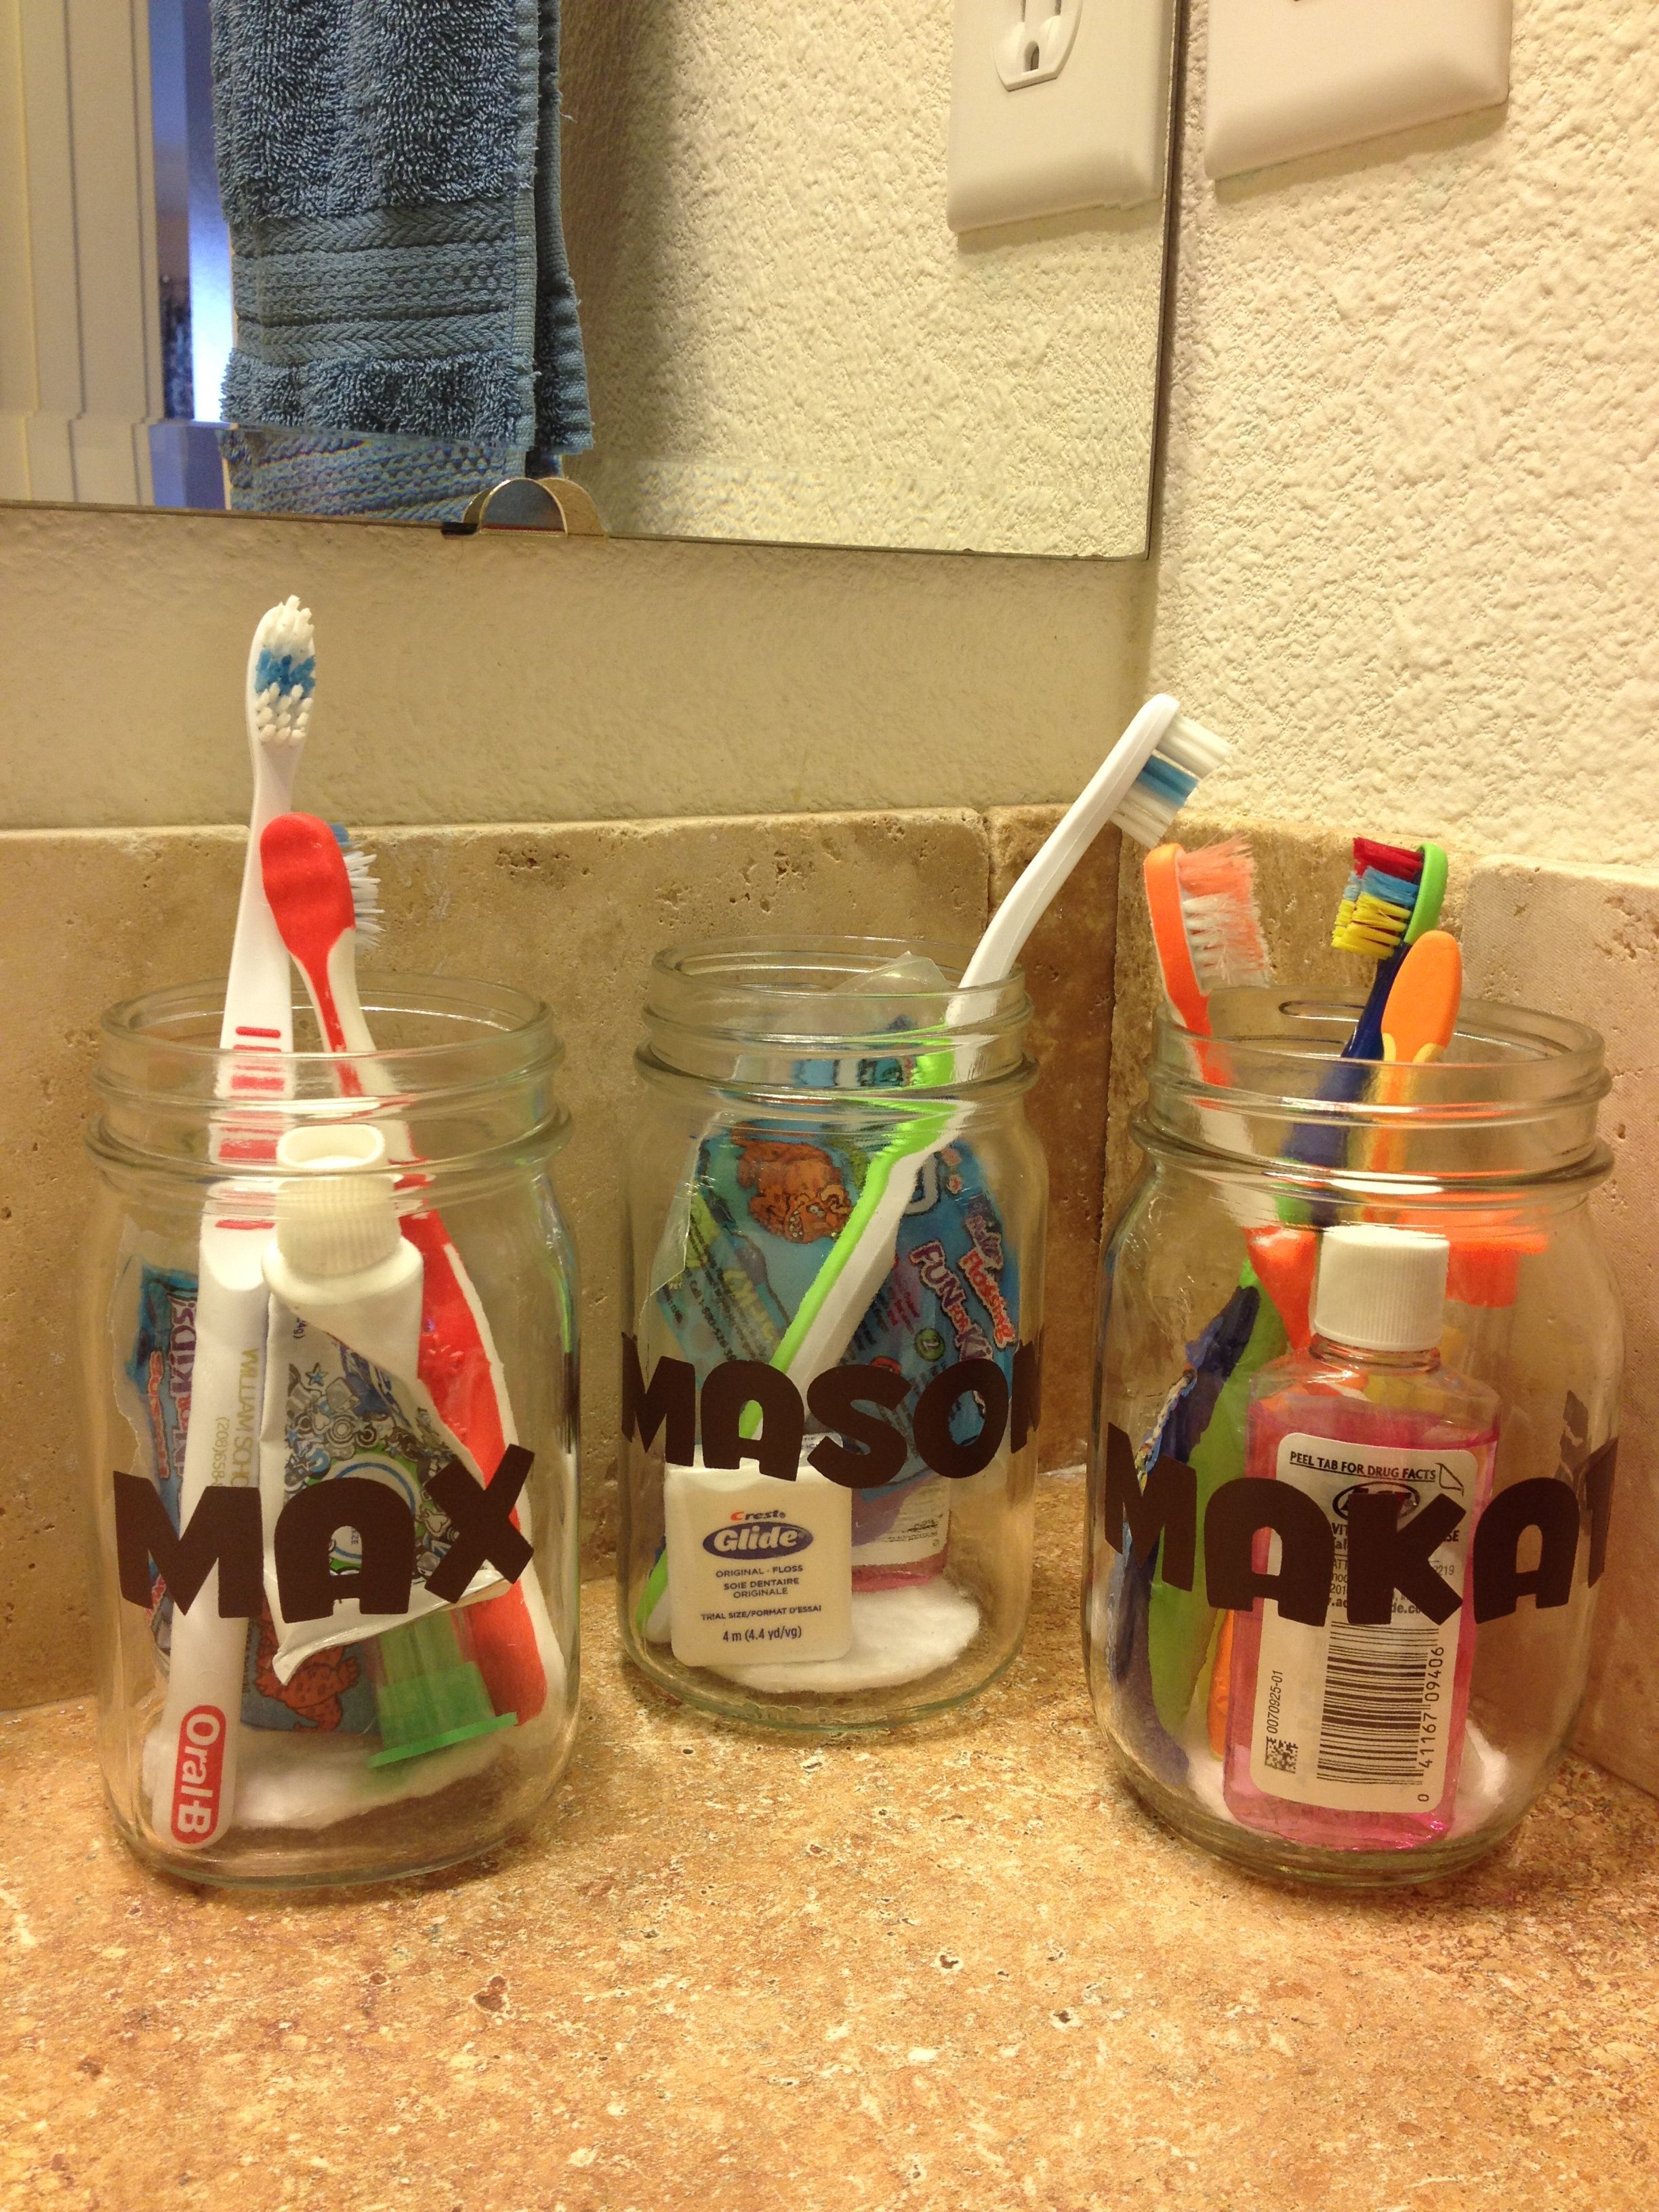 Kids names for their bathroom mason jars!